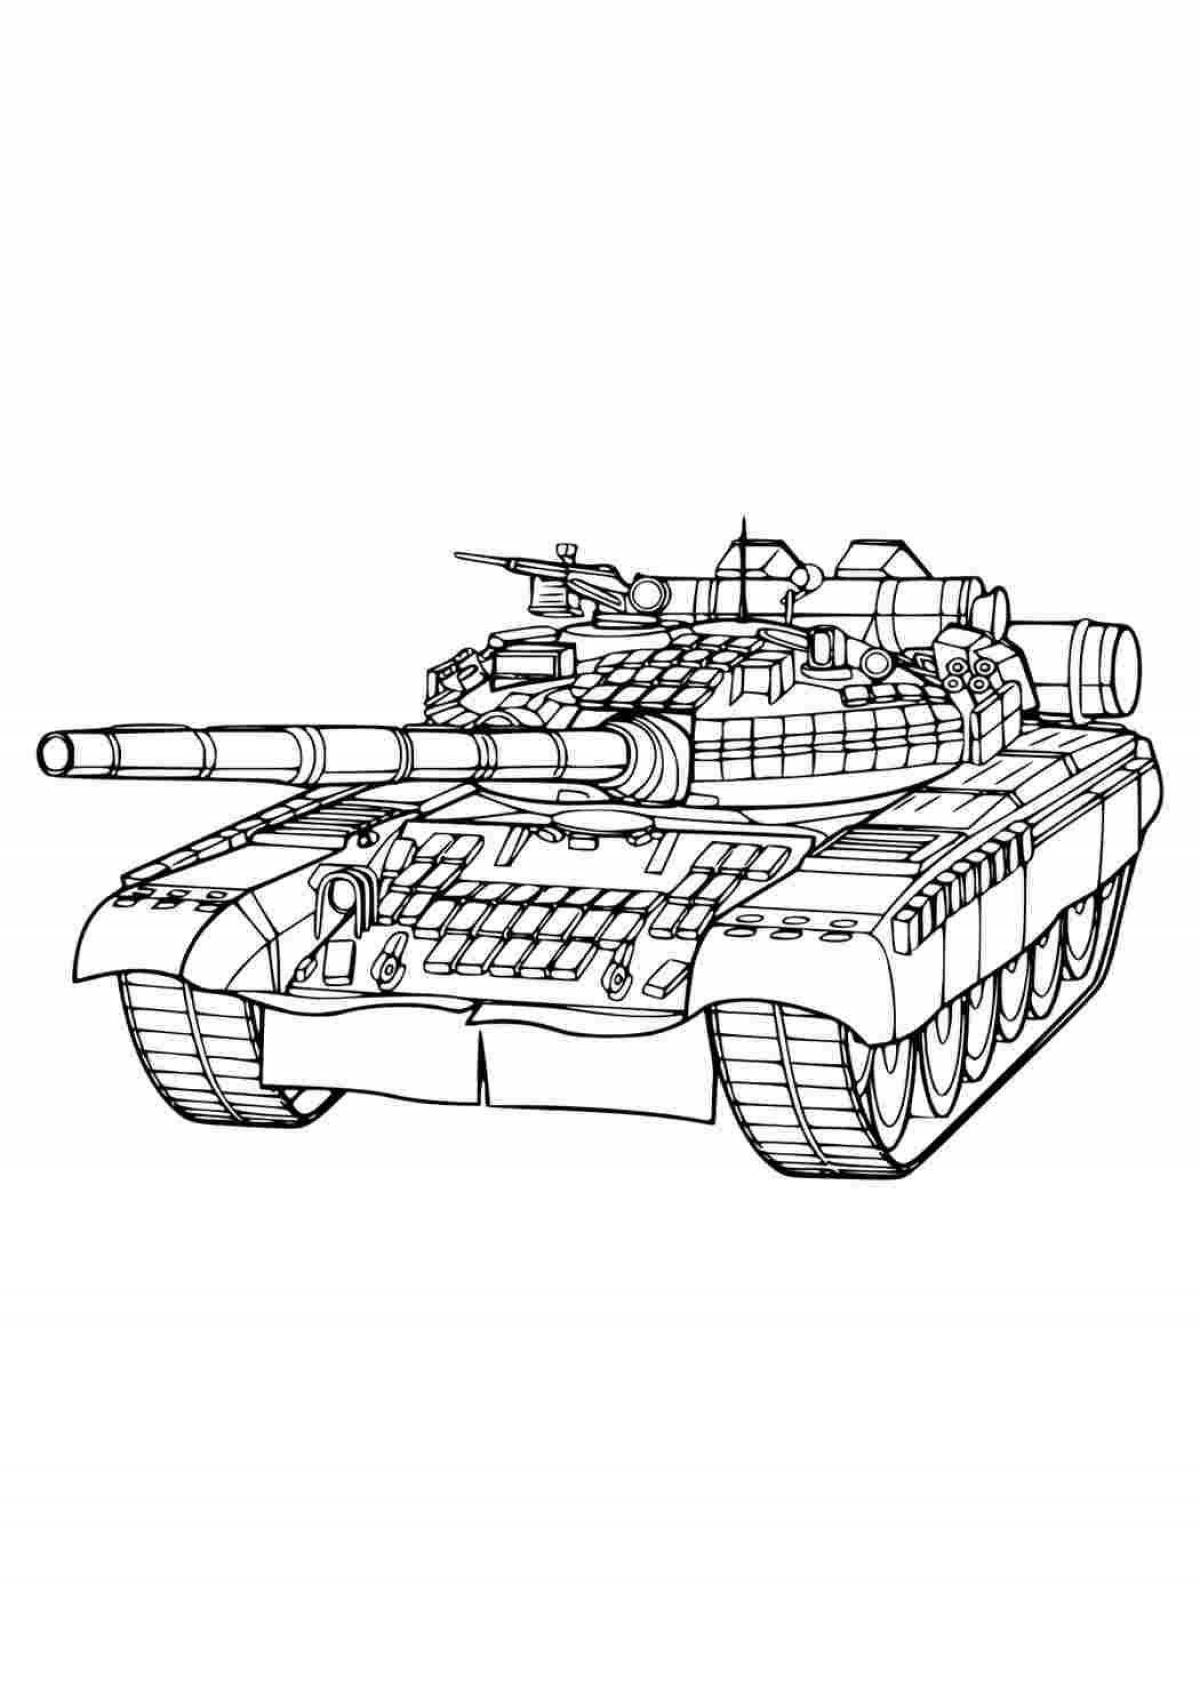 Coloring page amazing tank t 14 armata